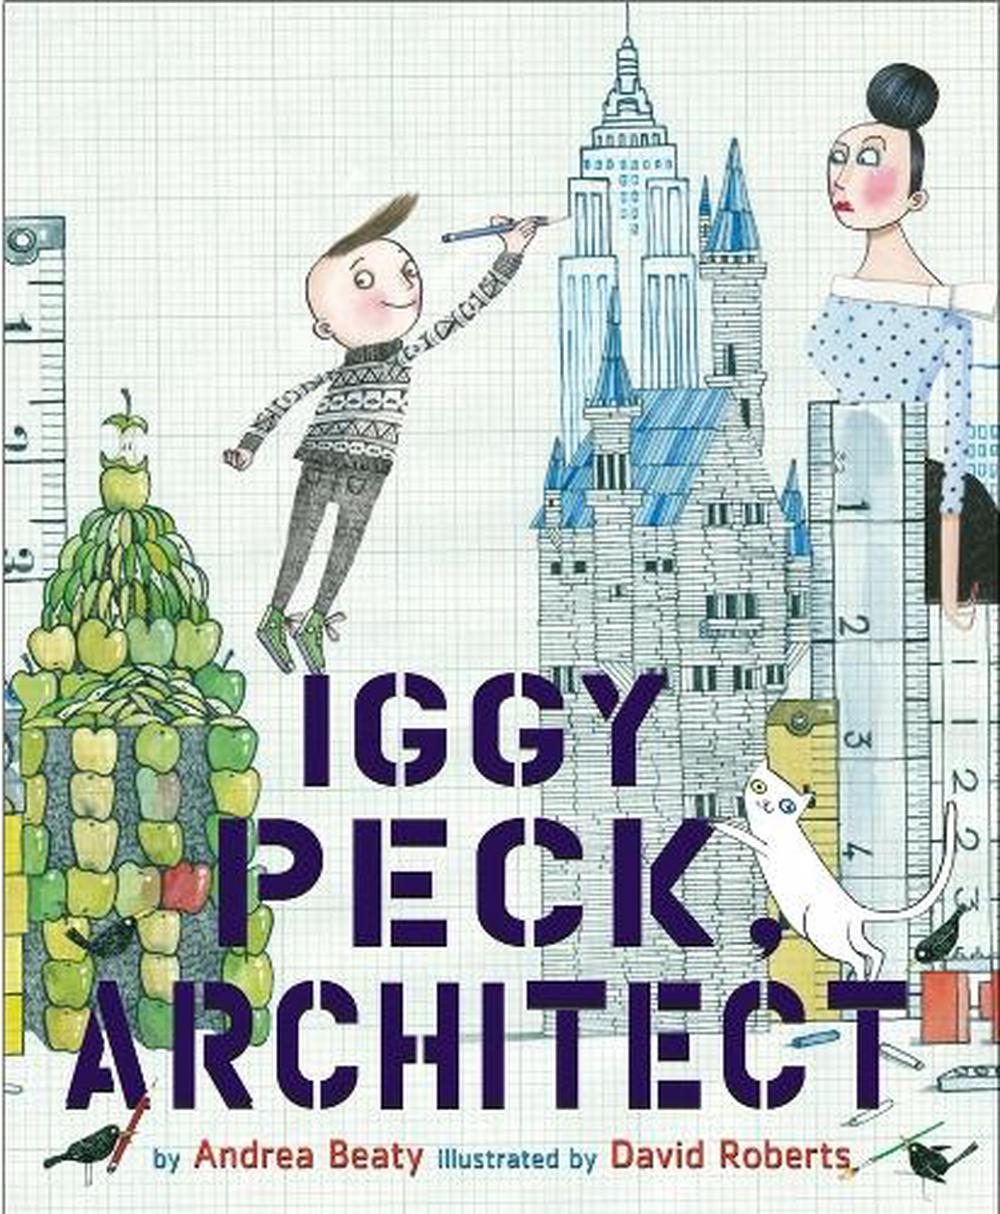 Iggy Peck, Architect by Andrea Beaty (English) Hardcover Book Free Shipping! 9780810911062 | eBay